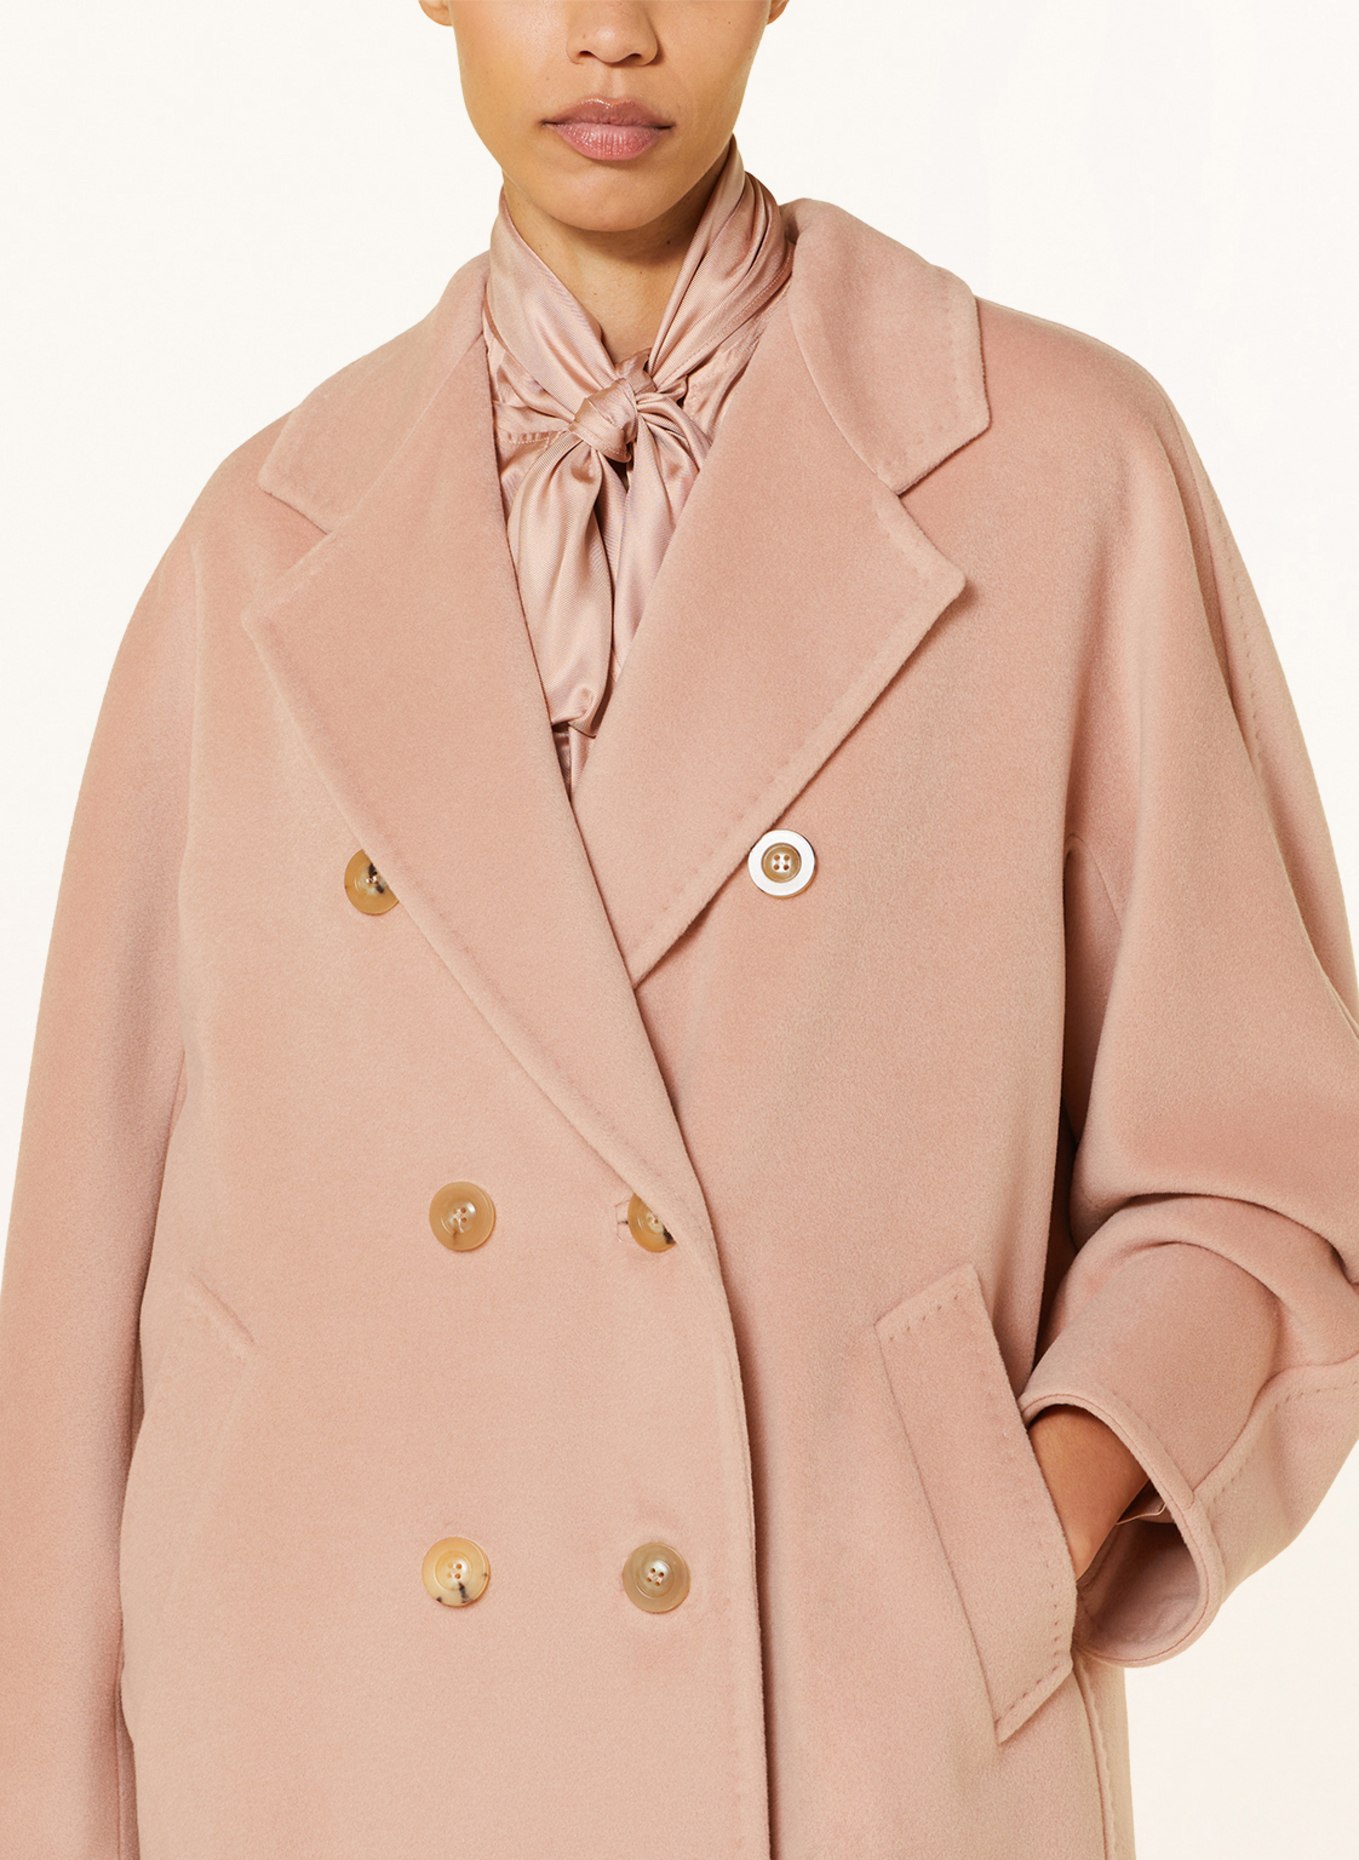 Buy Madame Women Pink Ultra Light Puffer Jacket at Amazon.in